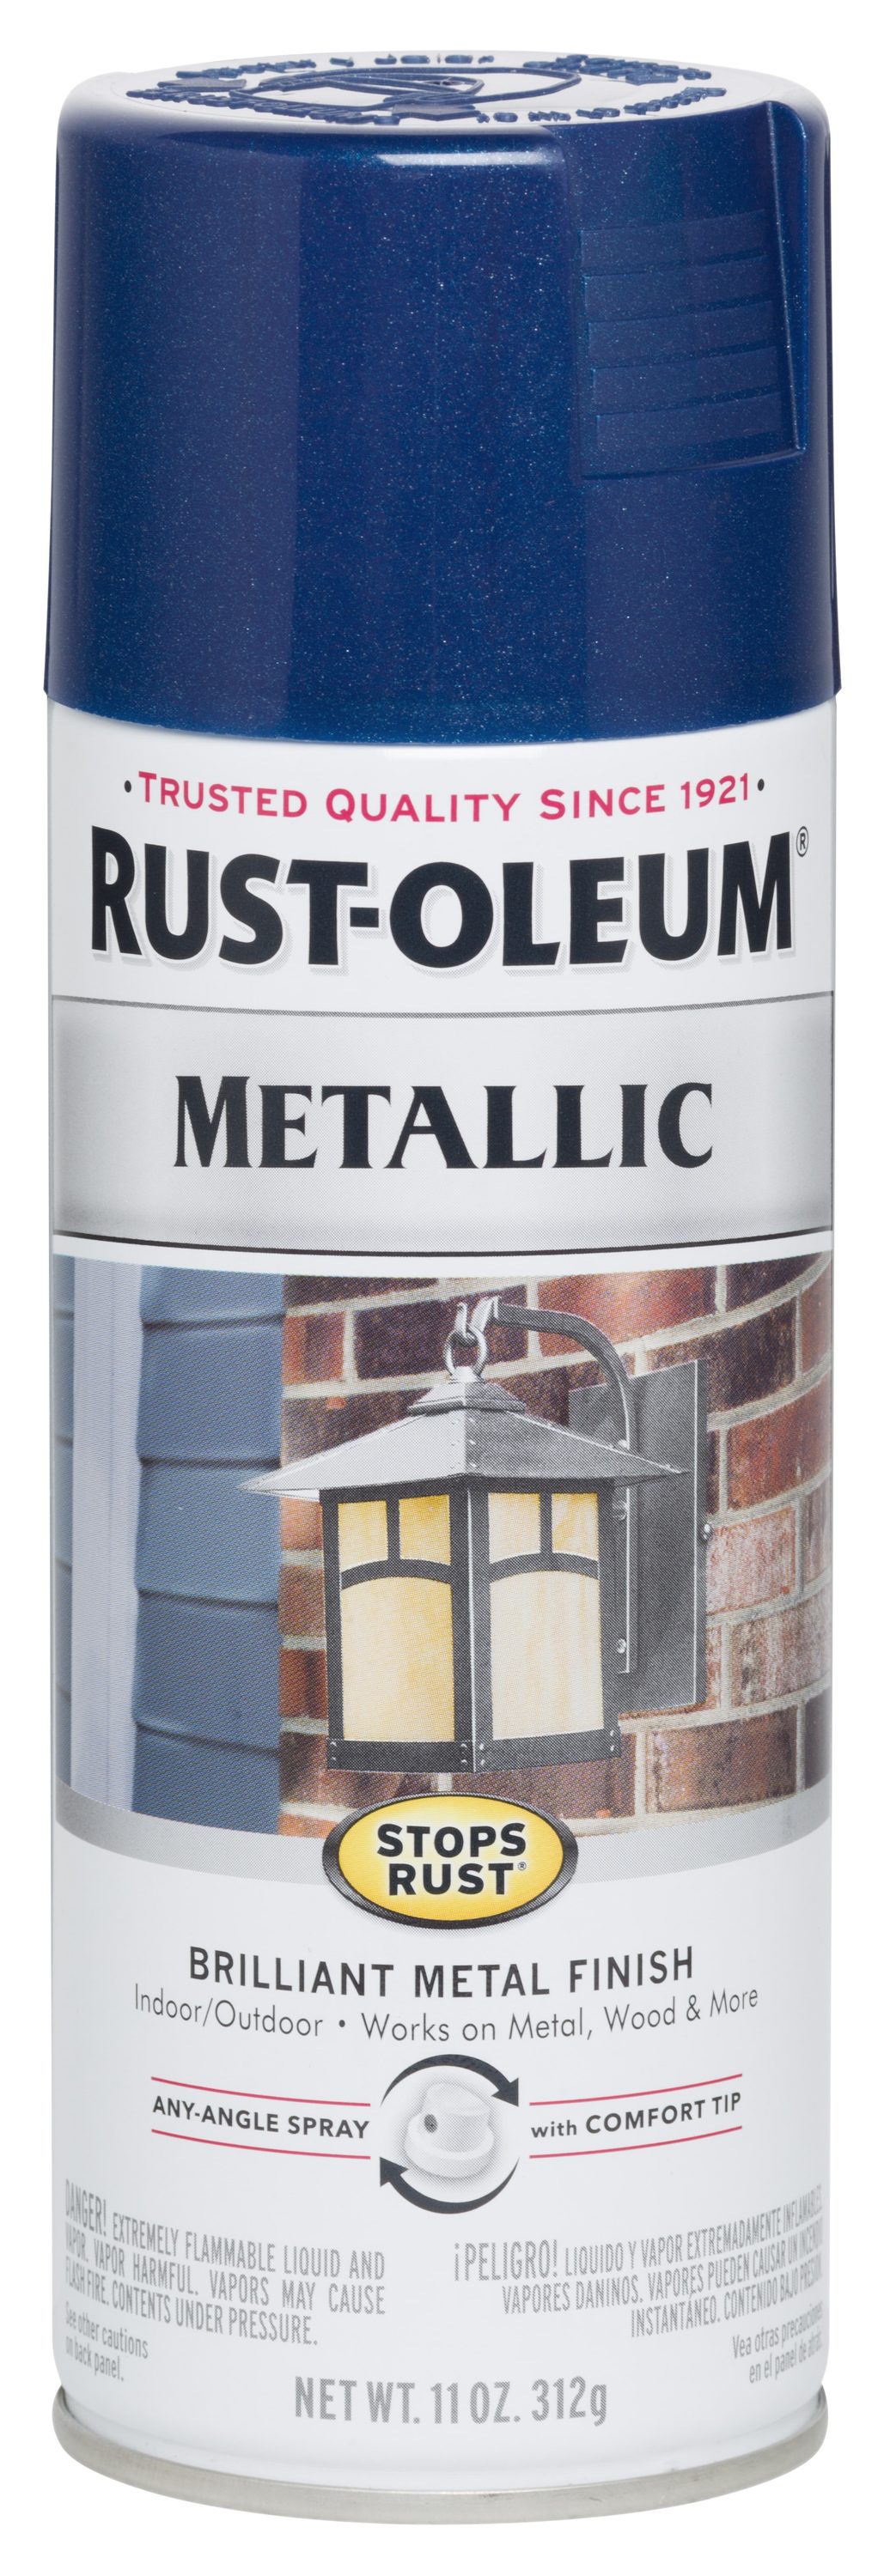 Rust-Oleum Professional Gloss Safety Blue Spray Paint (NET WT. 15